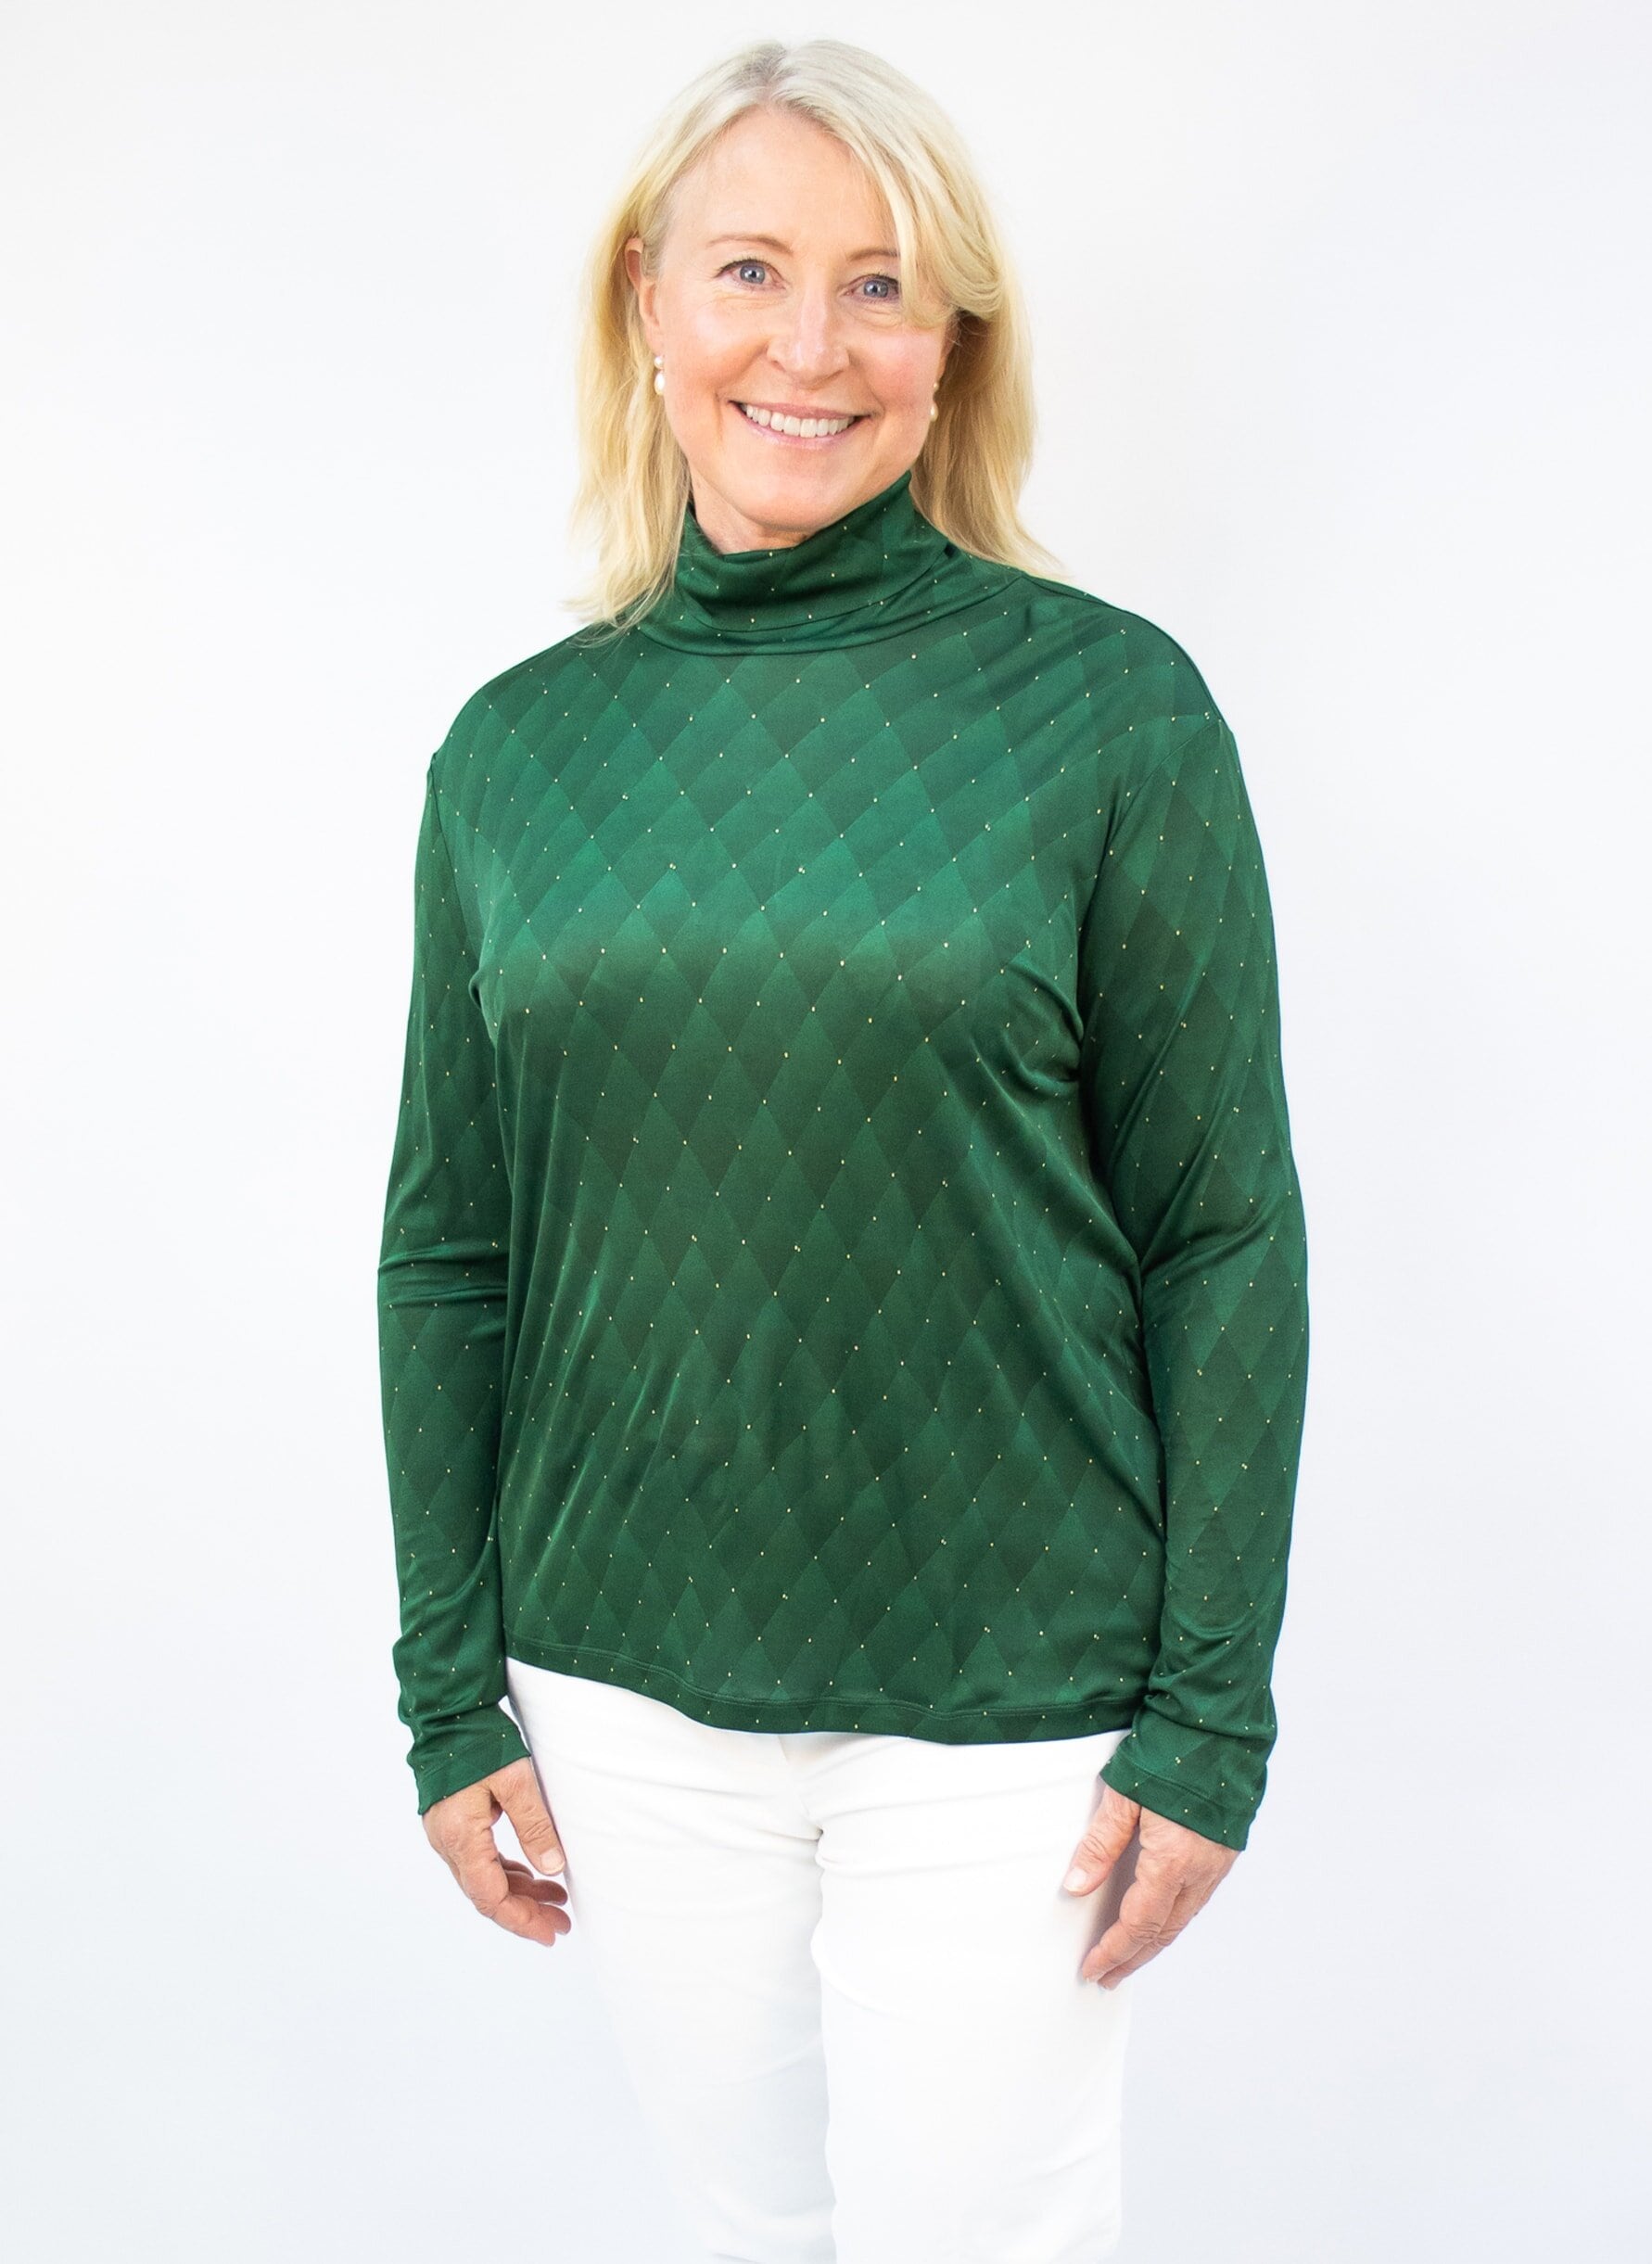 Women's long sleeve polo shirt, Green Checkered